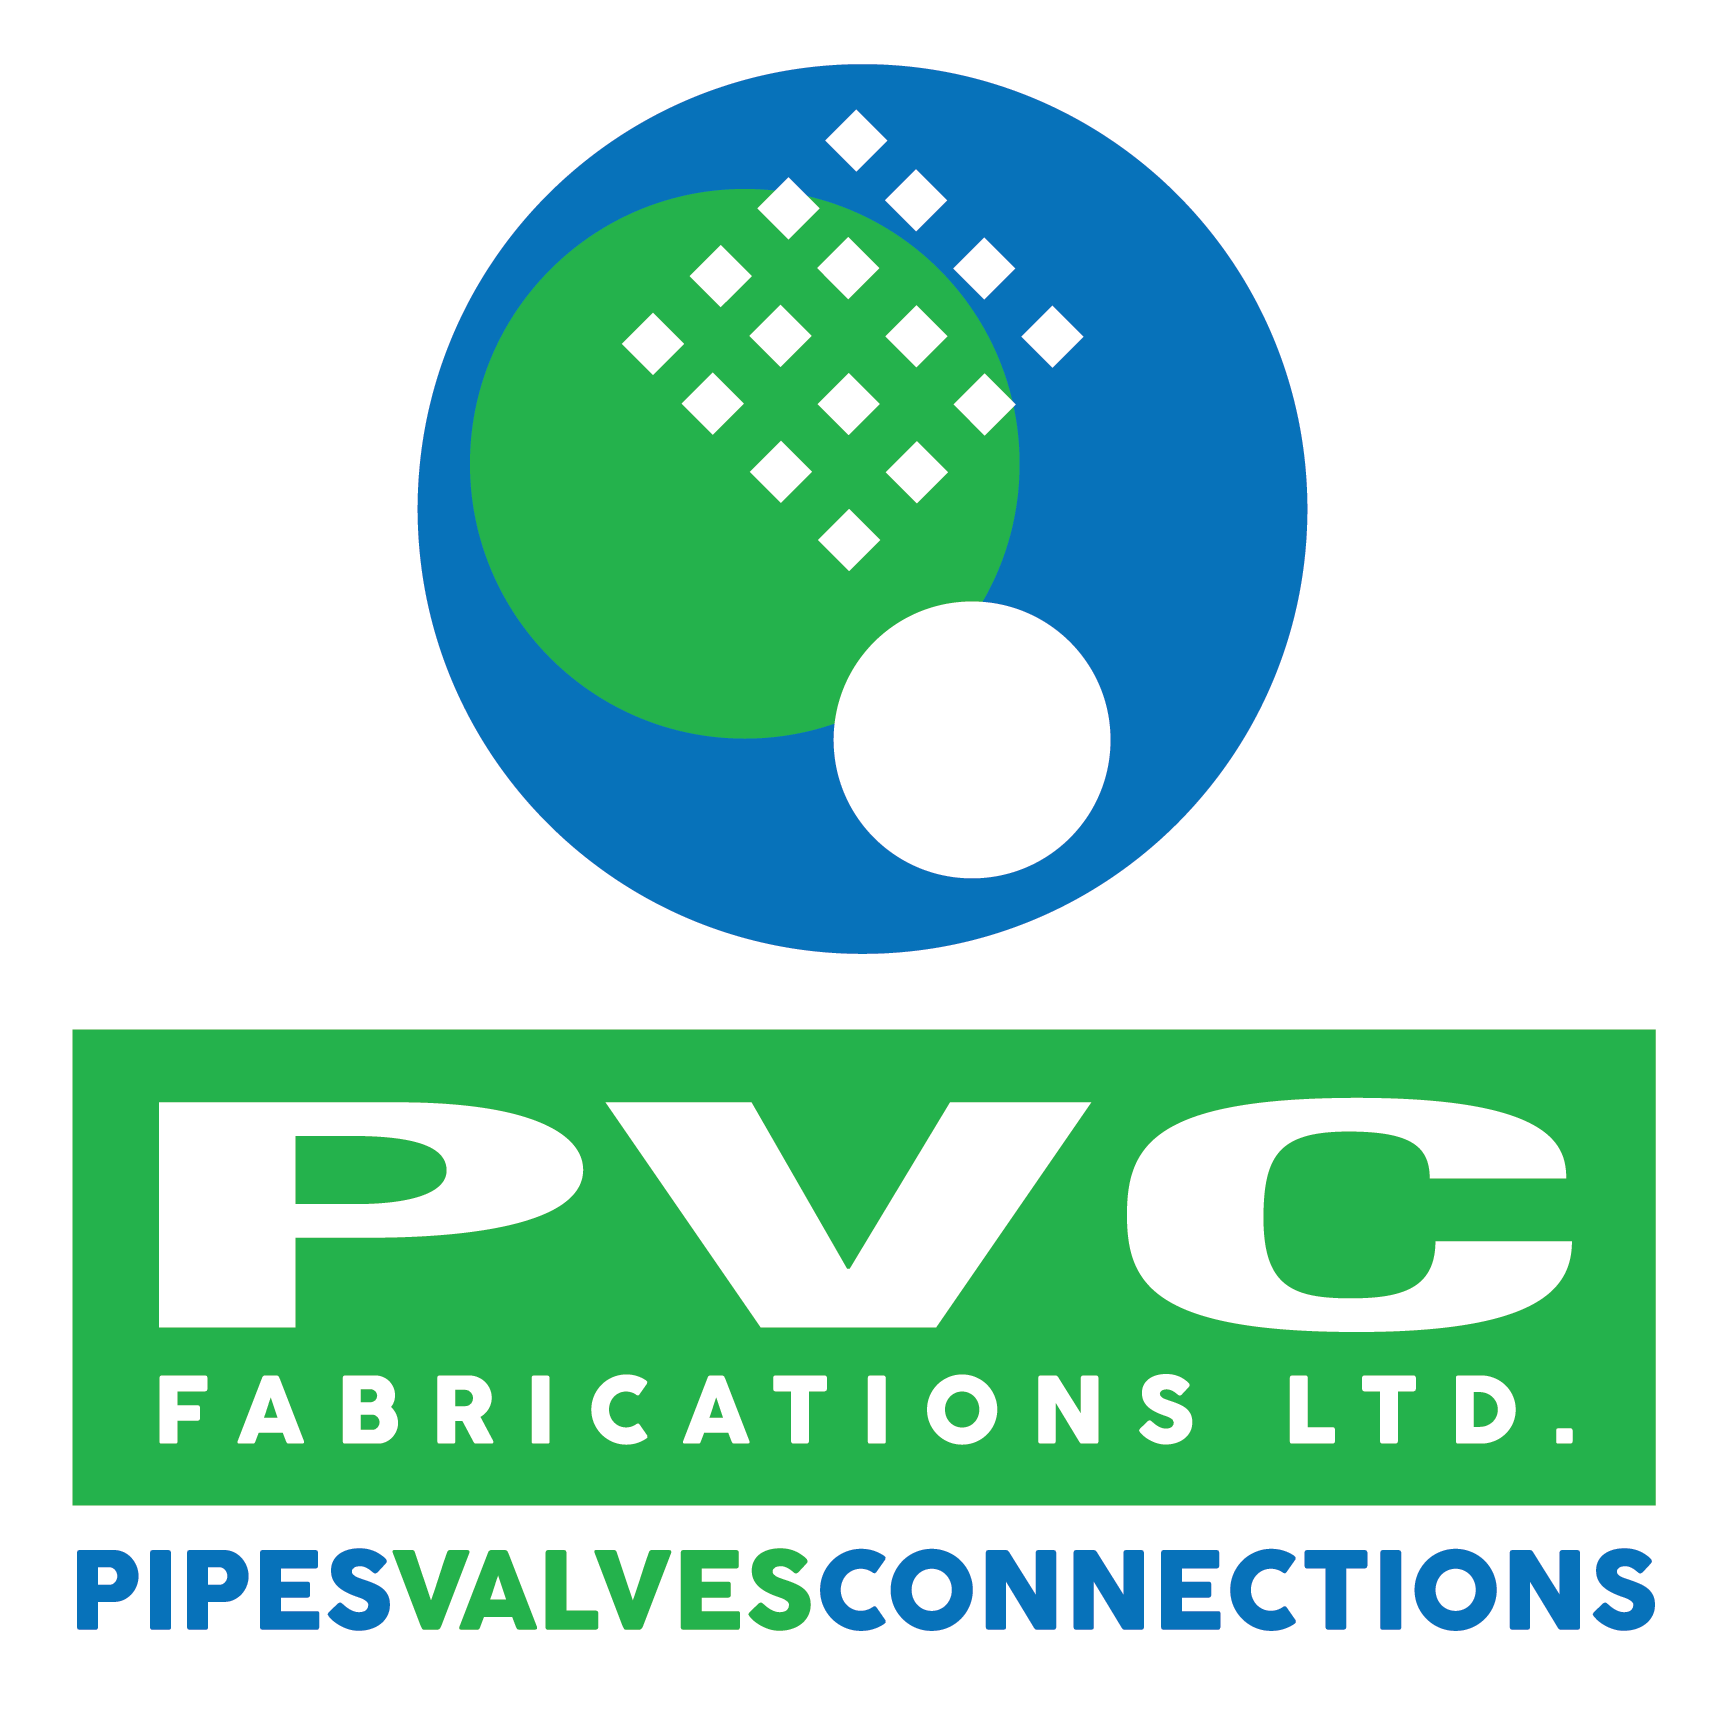 PVC FABRICATIONS